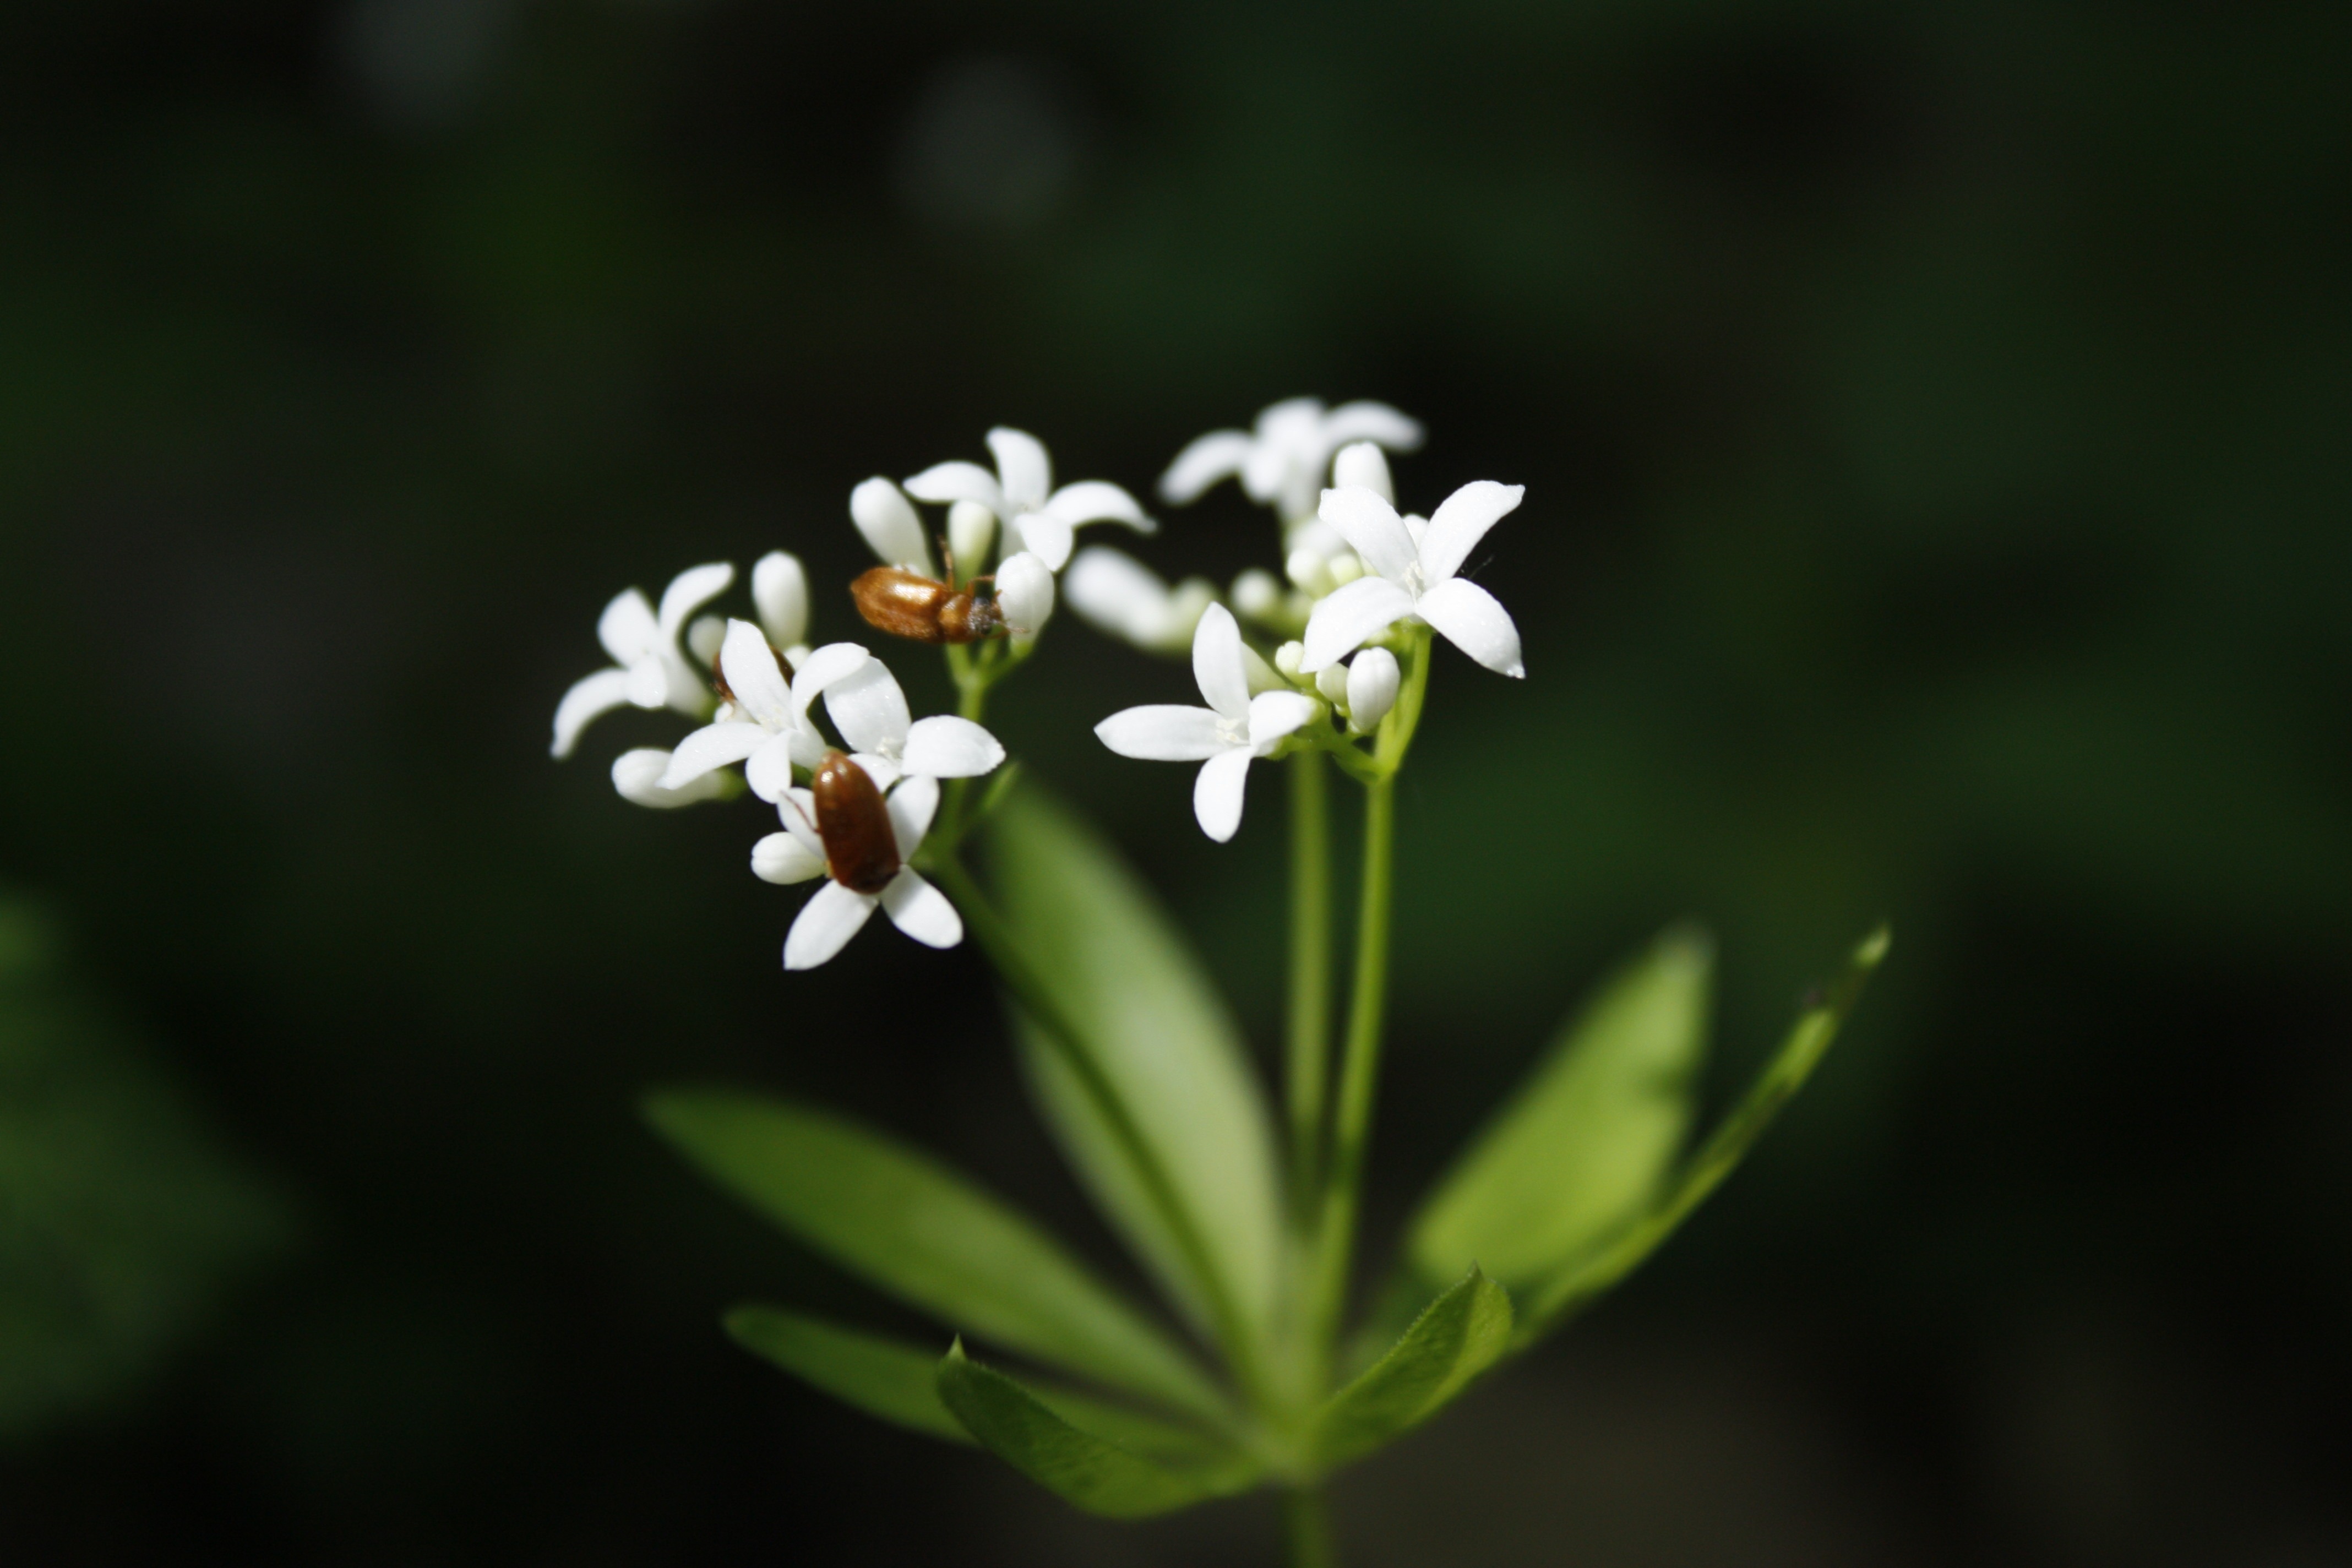 green leafed white petaled flower